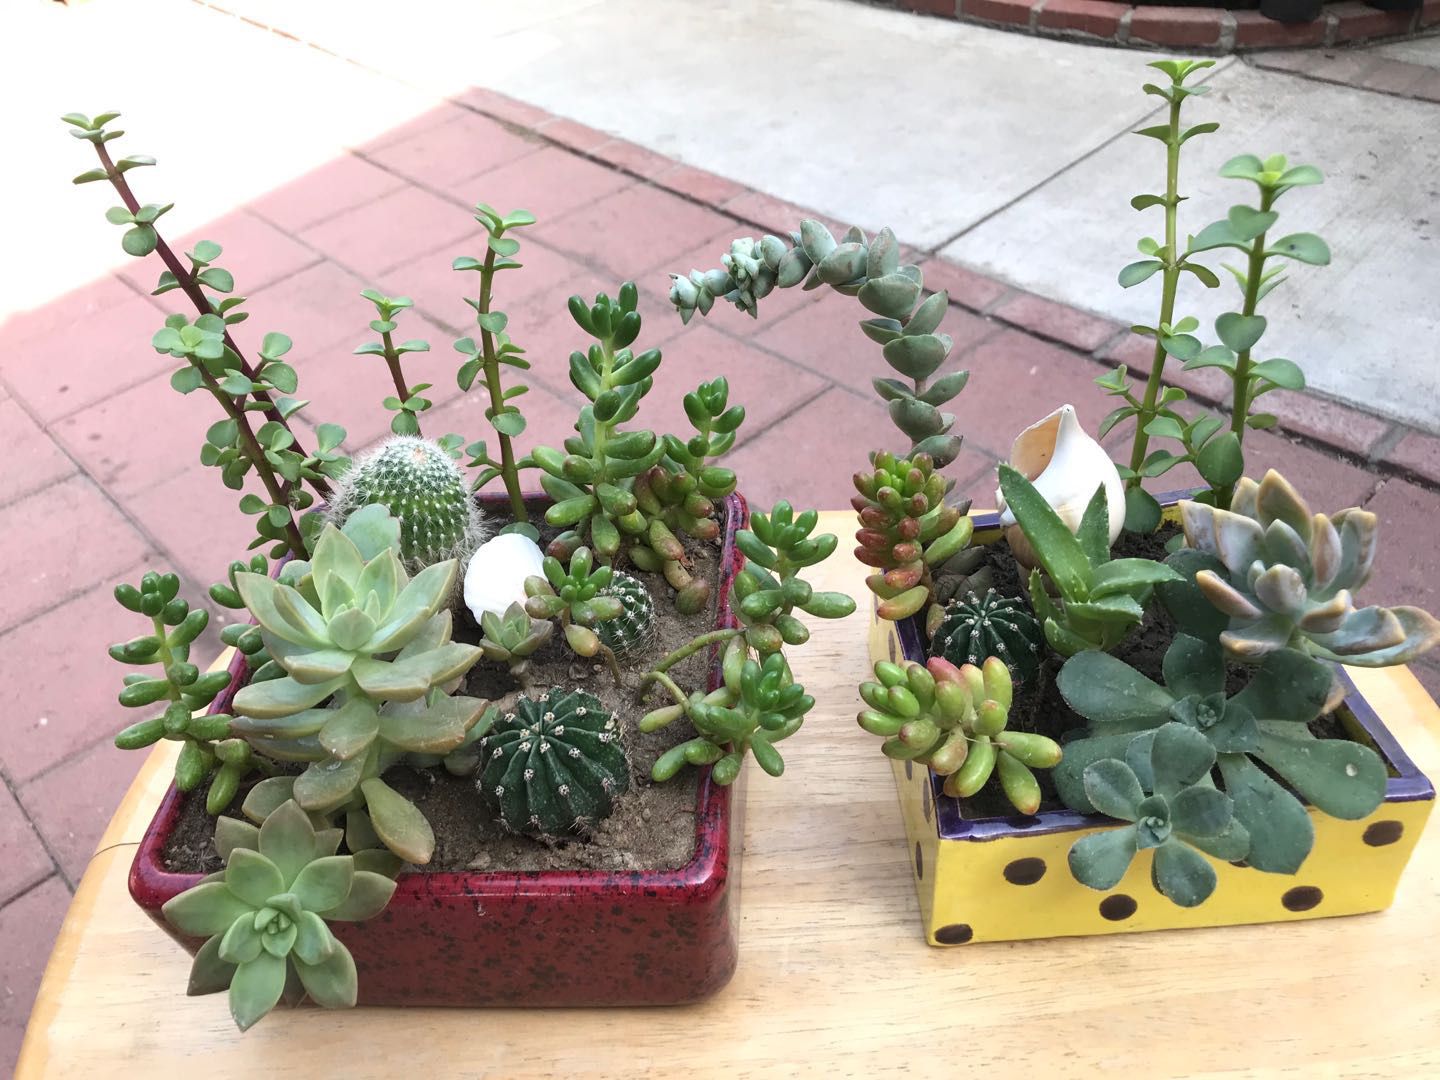 Pair of succulents cactus flowers plants jade aloe Vera in ceramic pots trending hot garden yard lifestyle mix variety